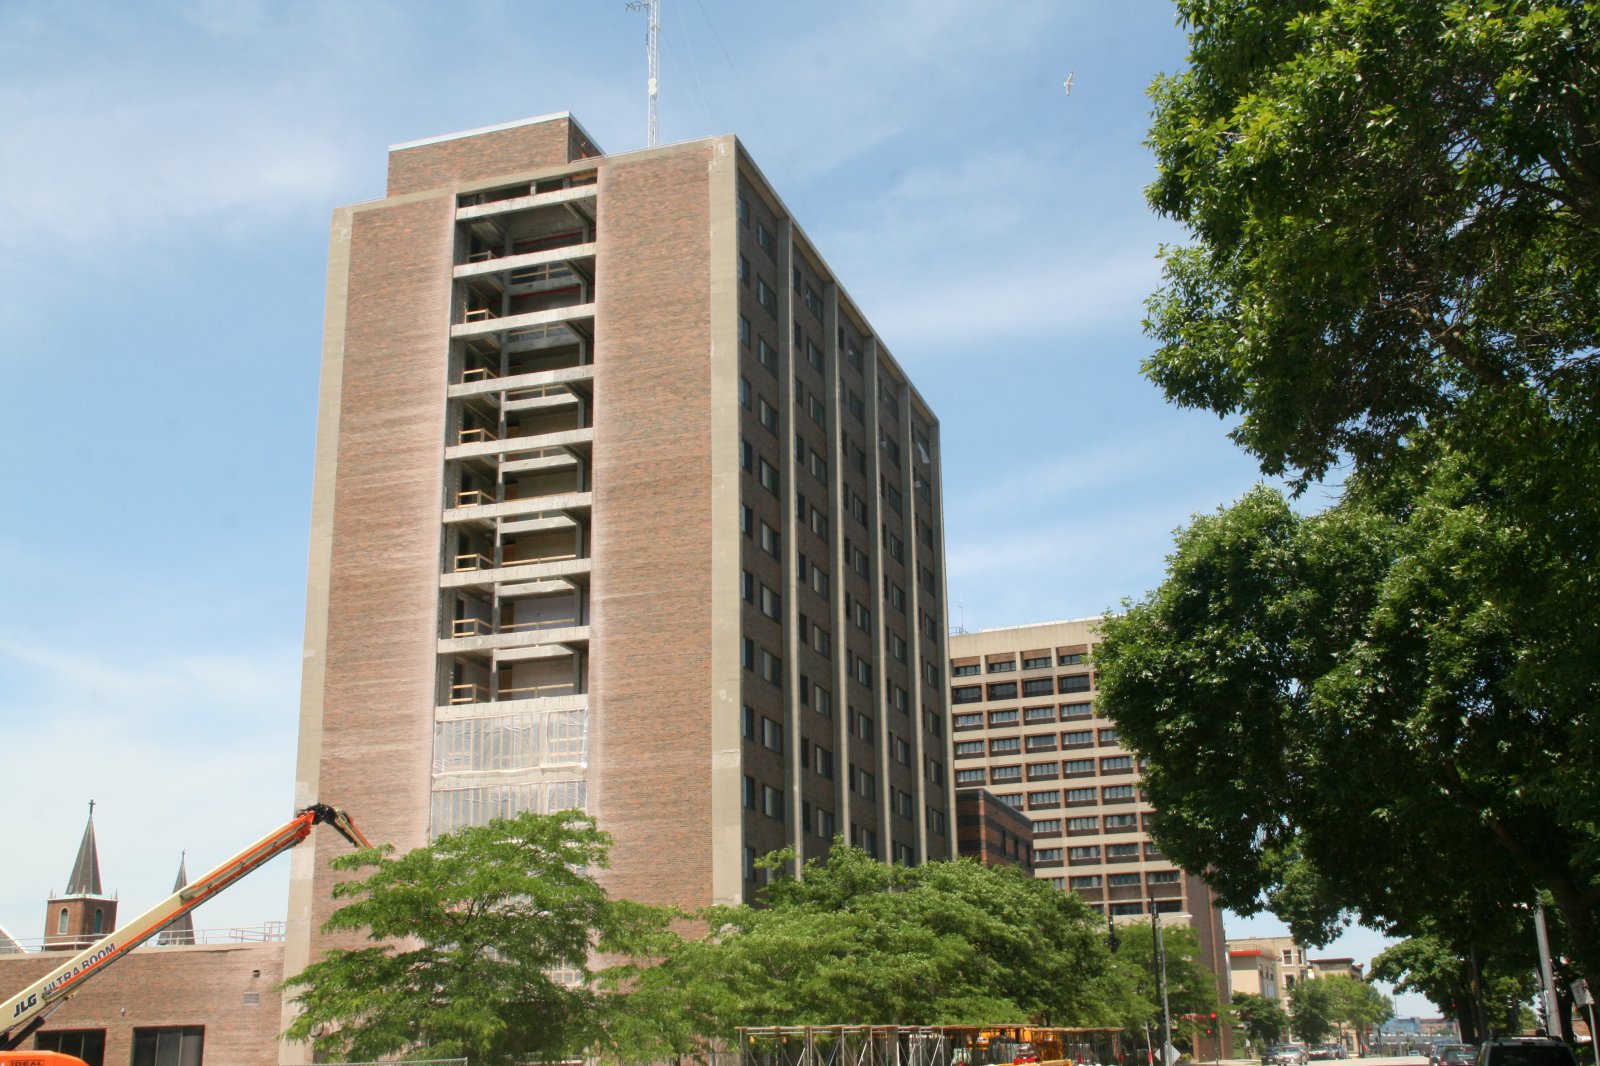 Roy W. Johnson Hall/Viets Tower Construction